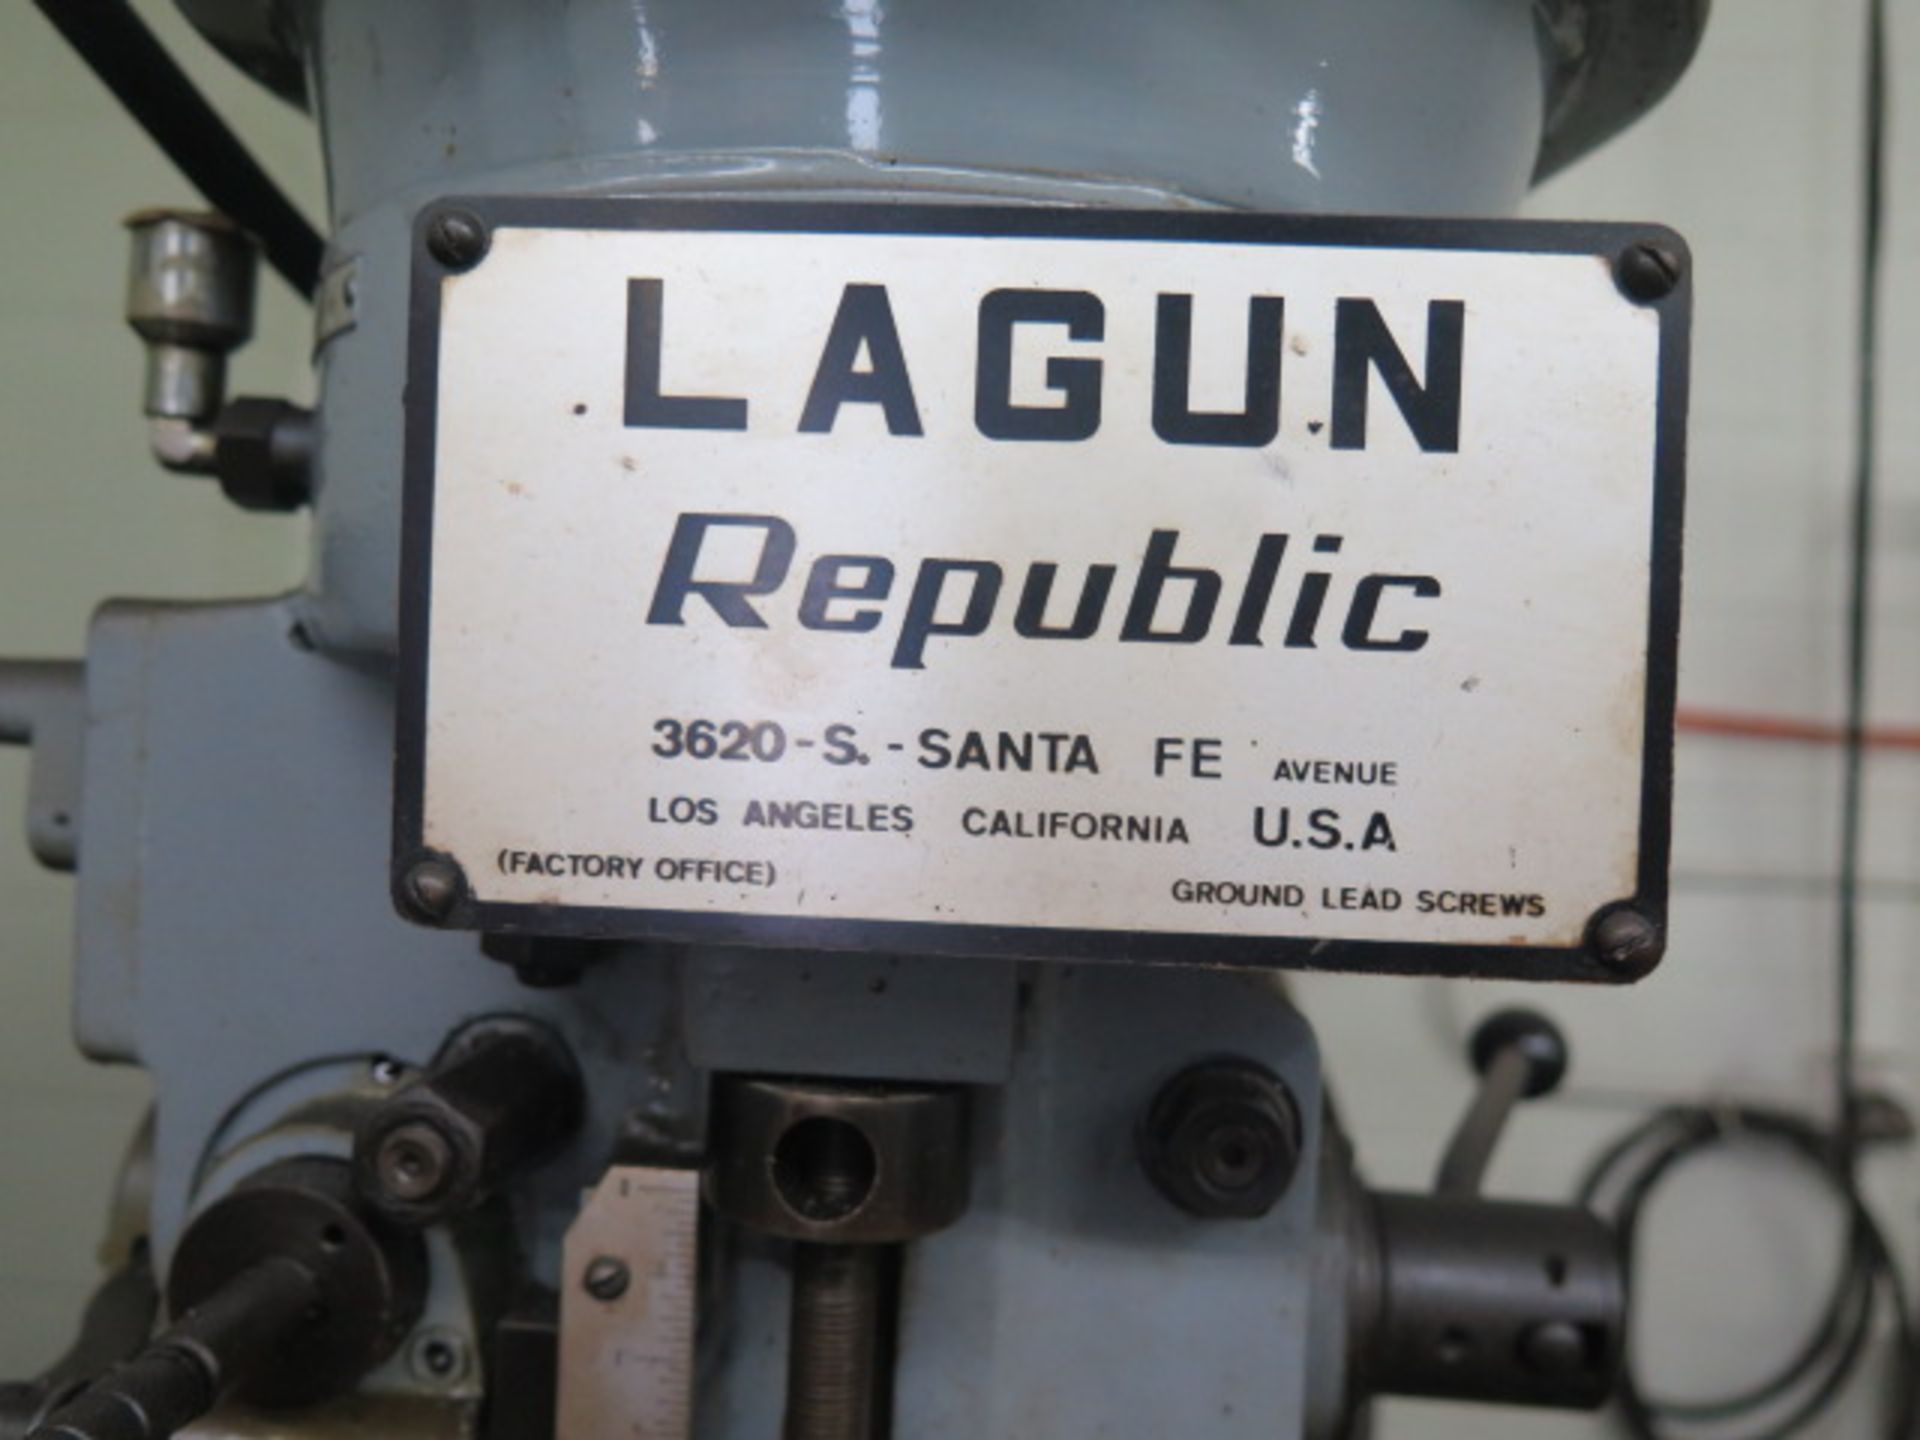 Lagun FT-1 Vertical Mill s/n SE-3115 w/ 2Hp Motor, 55-2940 RPM, 8-Speeds, 4” Riser, Power Feed, 9” x - Image 7 of 12